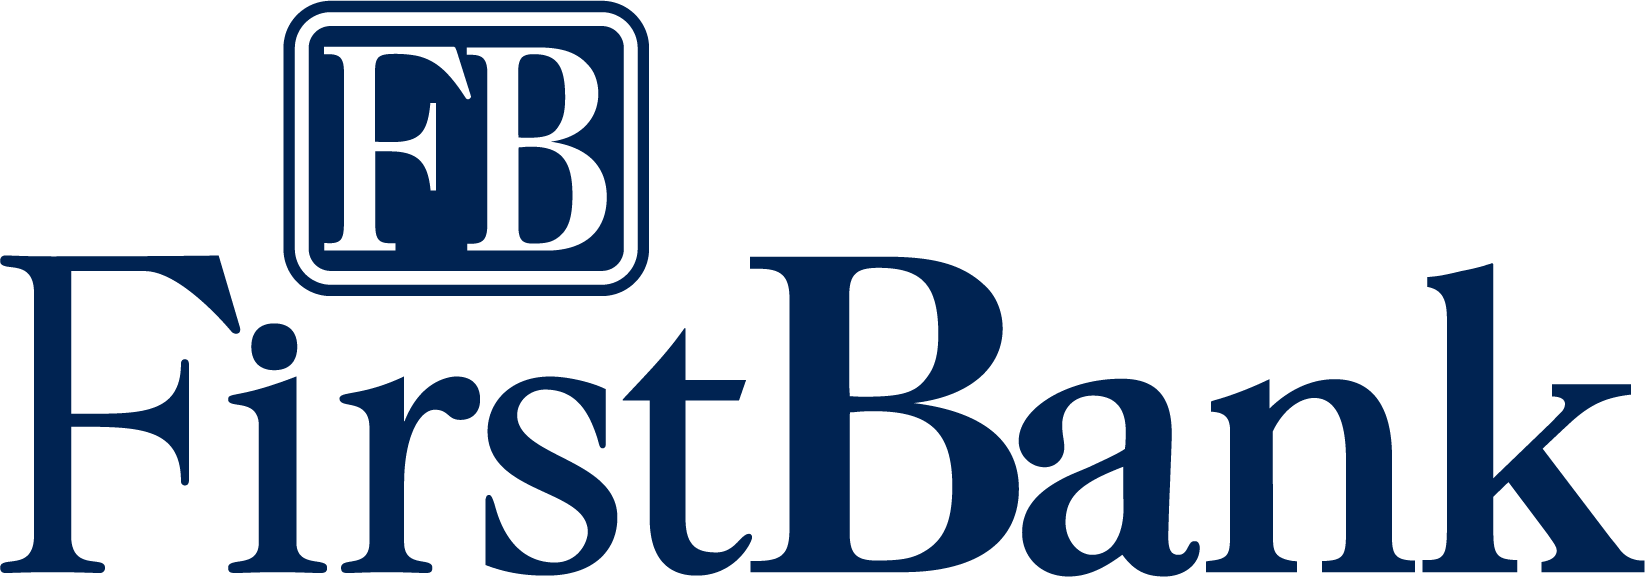 firstbank-logo_CMYK.png